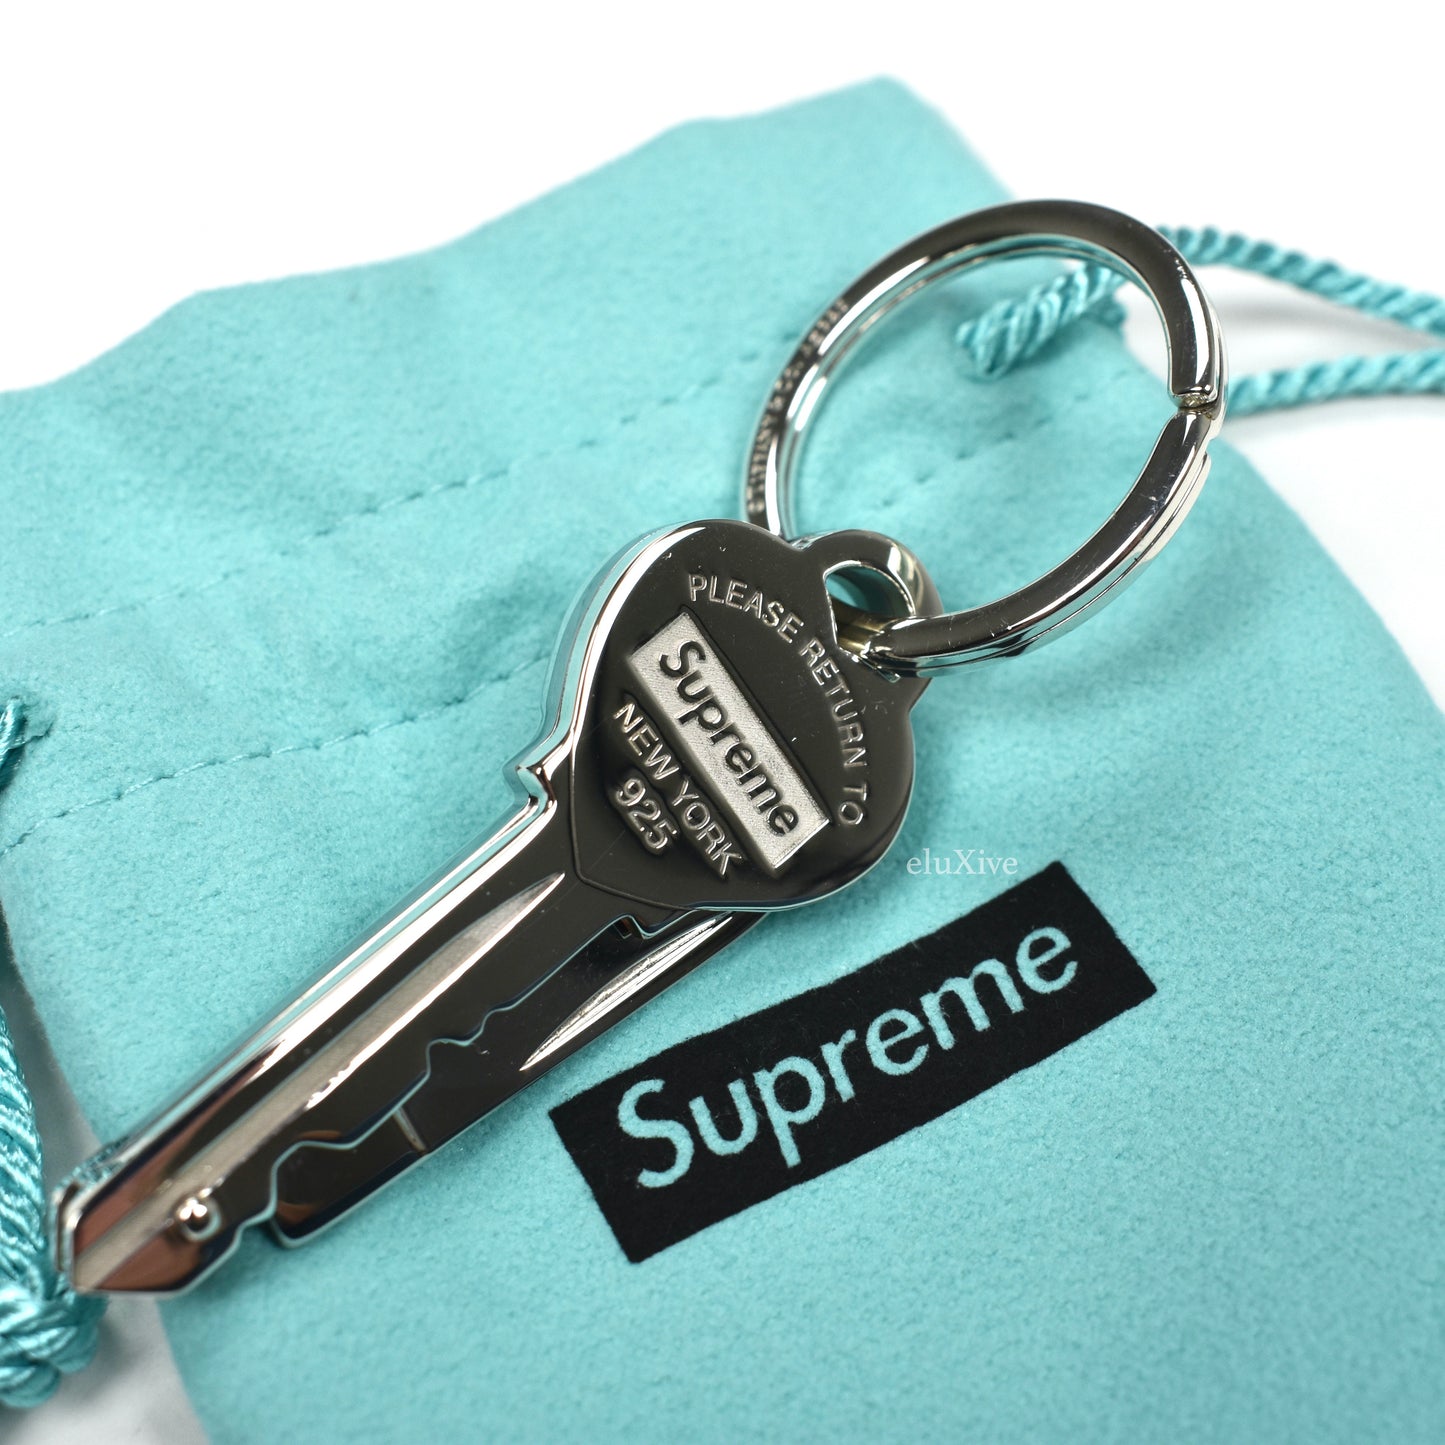 Supreme x Tiffany - Silver Box Logo Key Knife